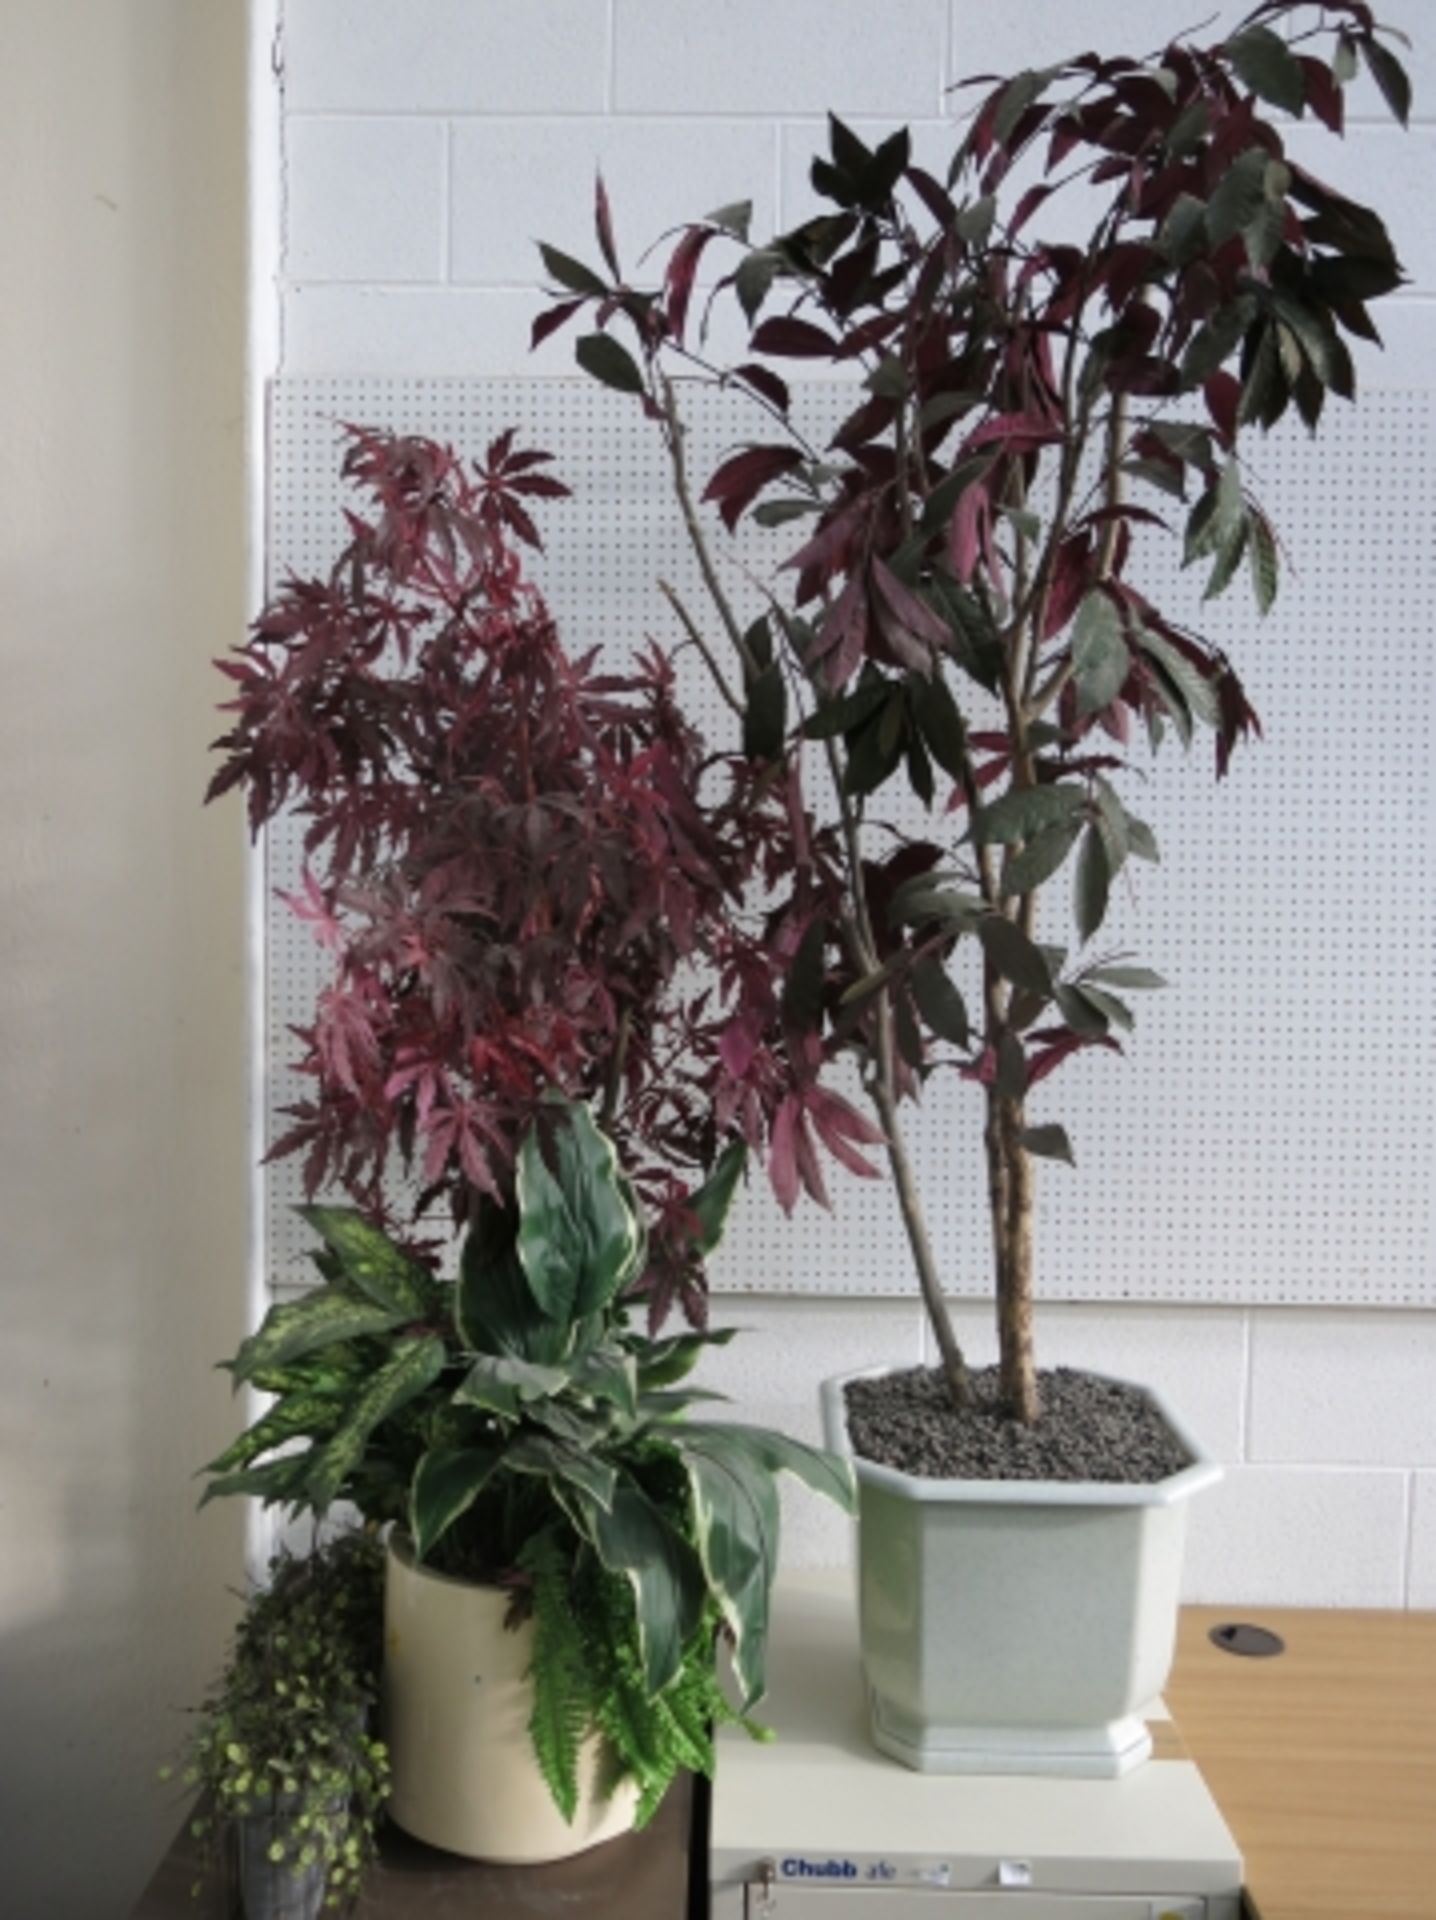 * Artificial office plants in plant pots